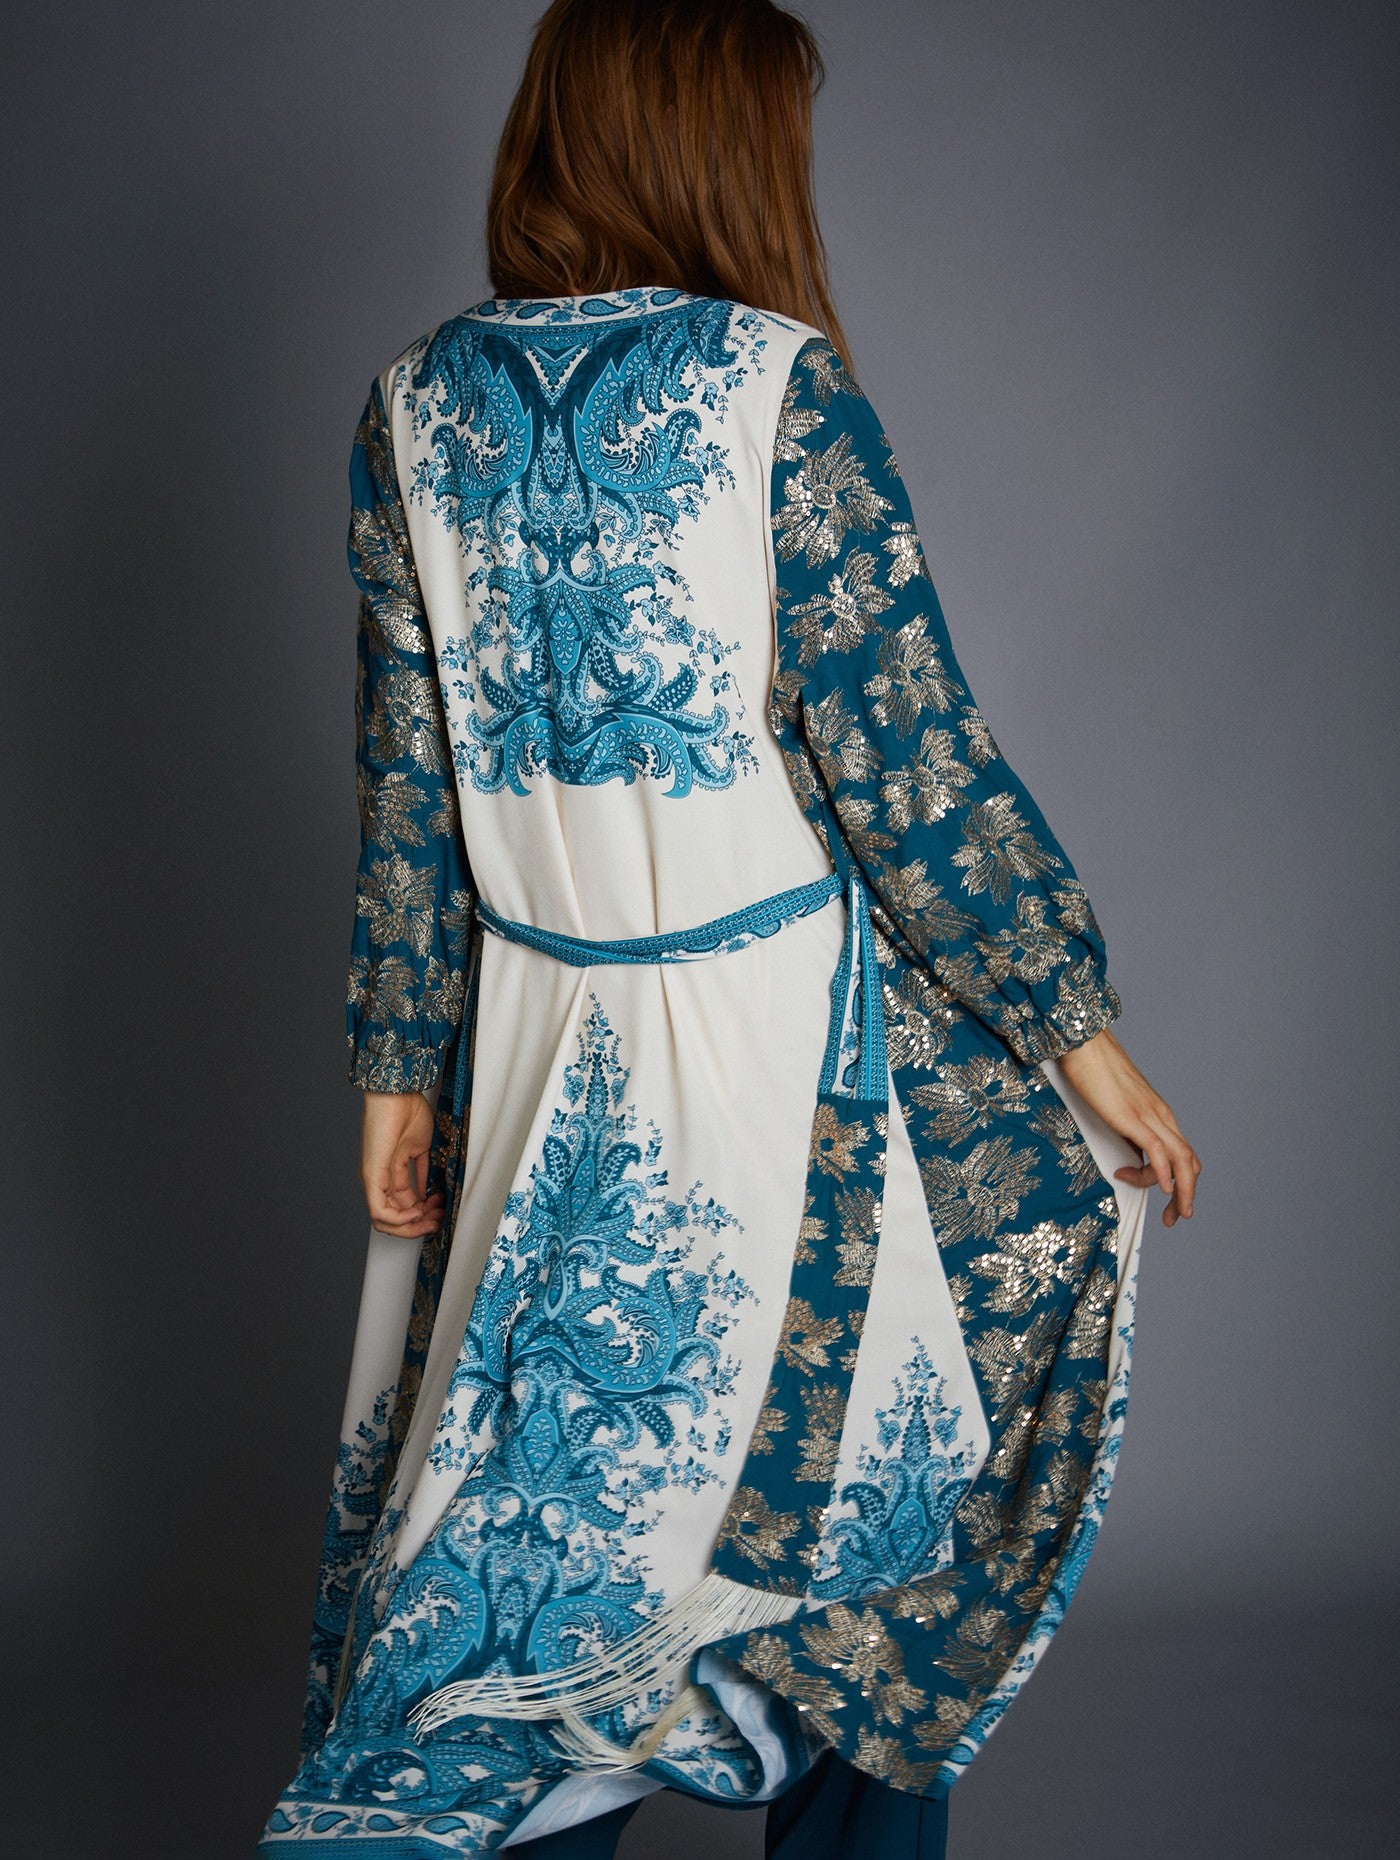 Kimono Azul by Meisie atrás